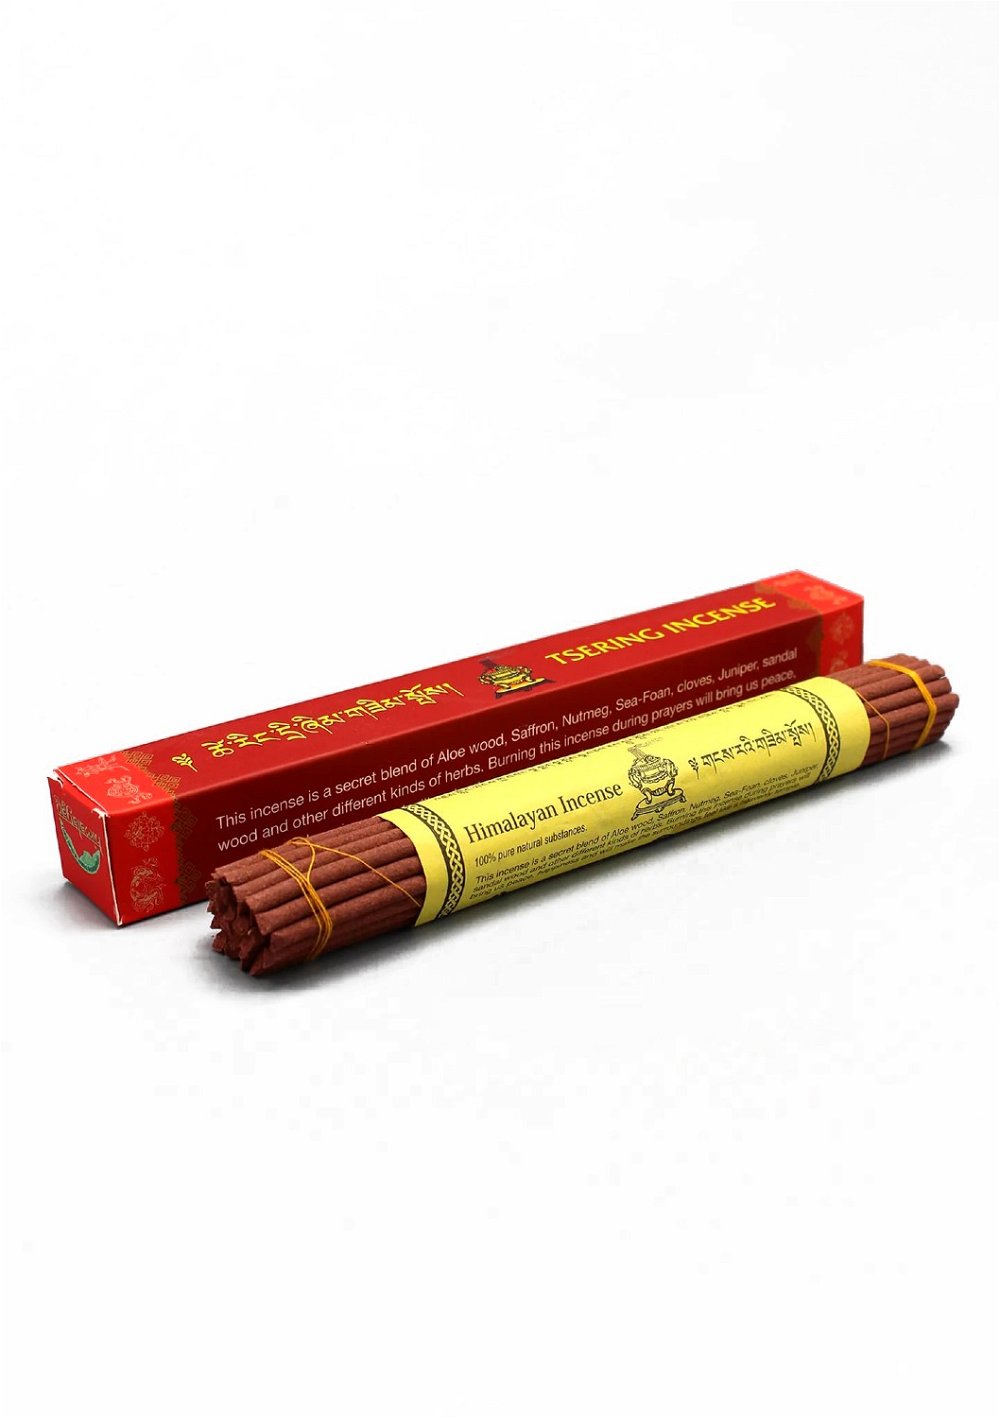 Благовоние Tsering Incense (Церингма), красная упаковка, 30 палочек по 21,5 см, 30, Tsering, красная упаковка, 